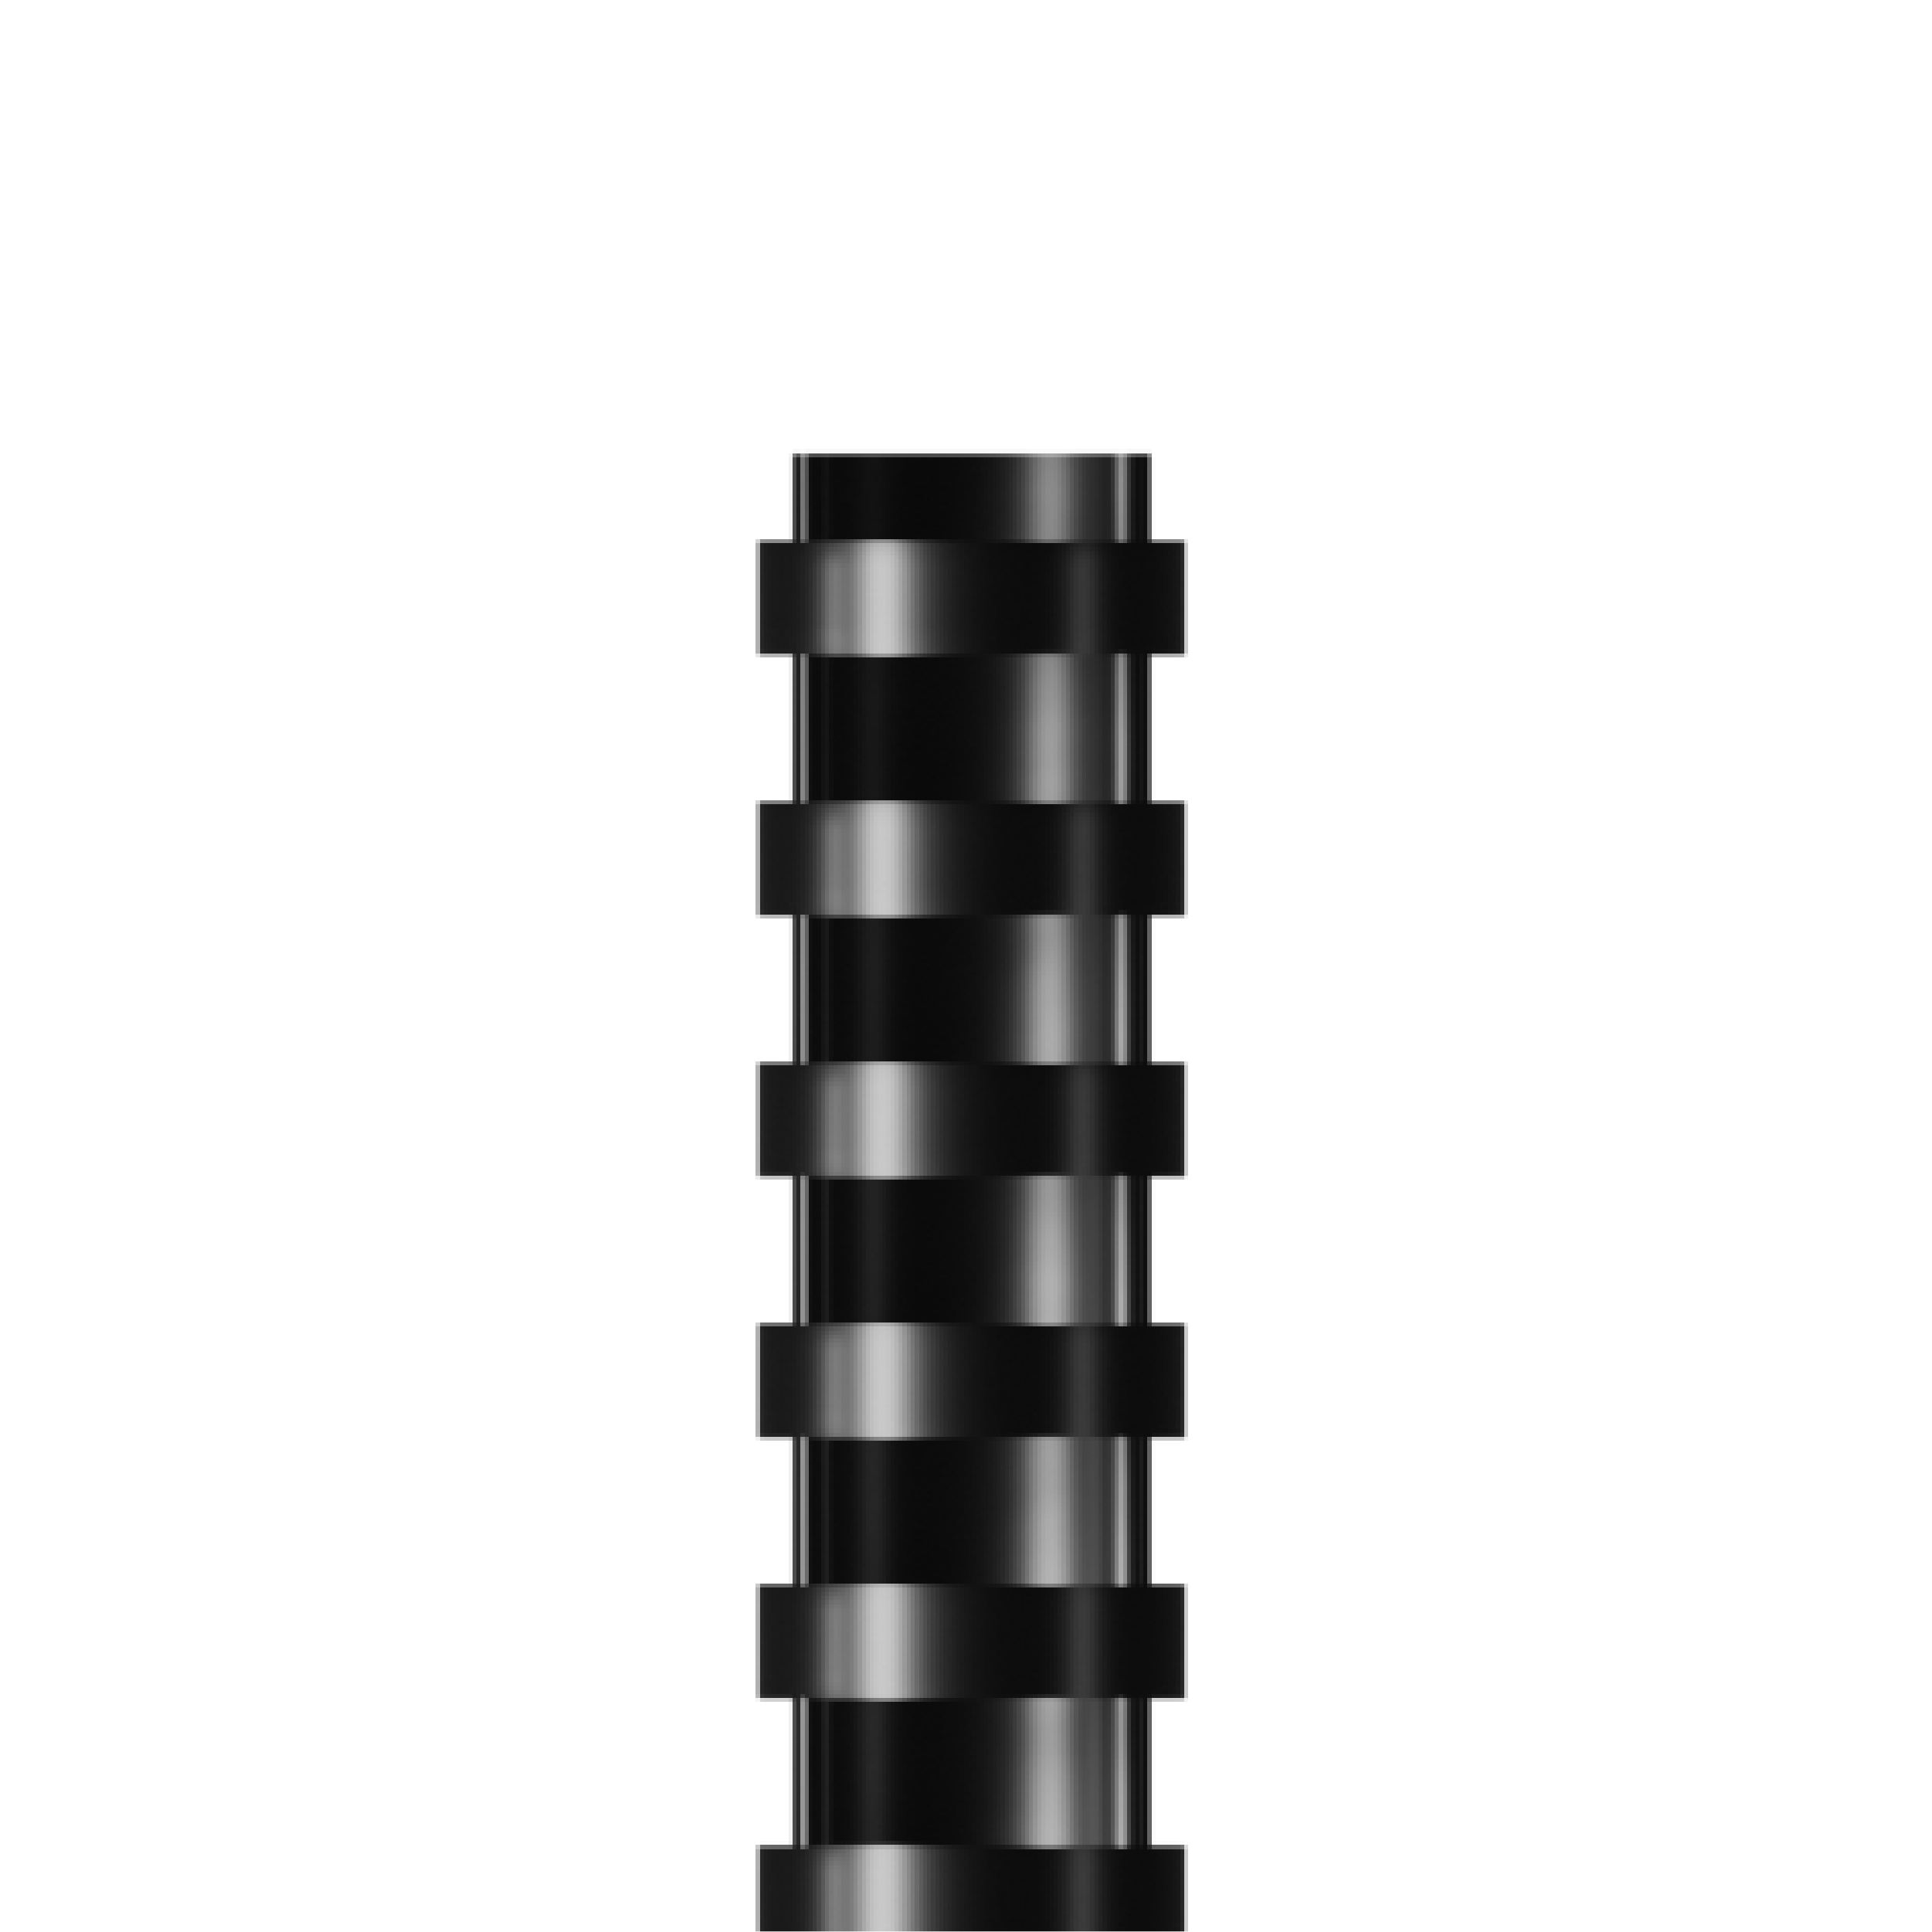 RAADO 22mm Plastic Spiral Binding Comb, Black